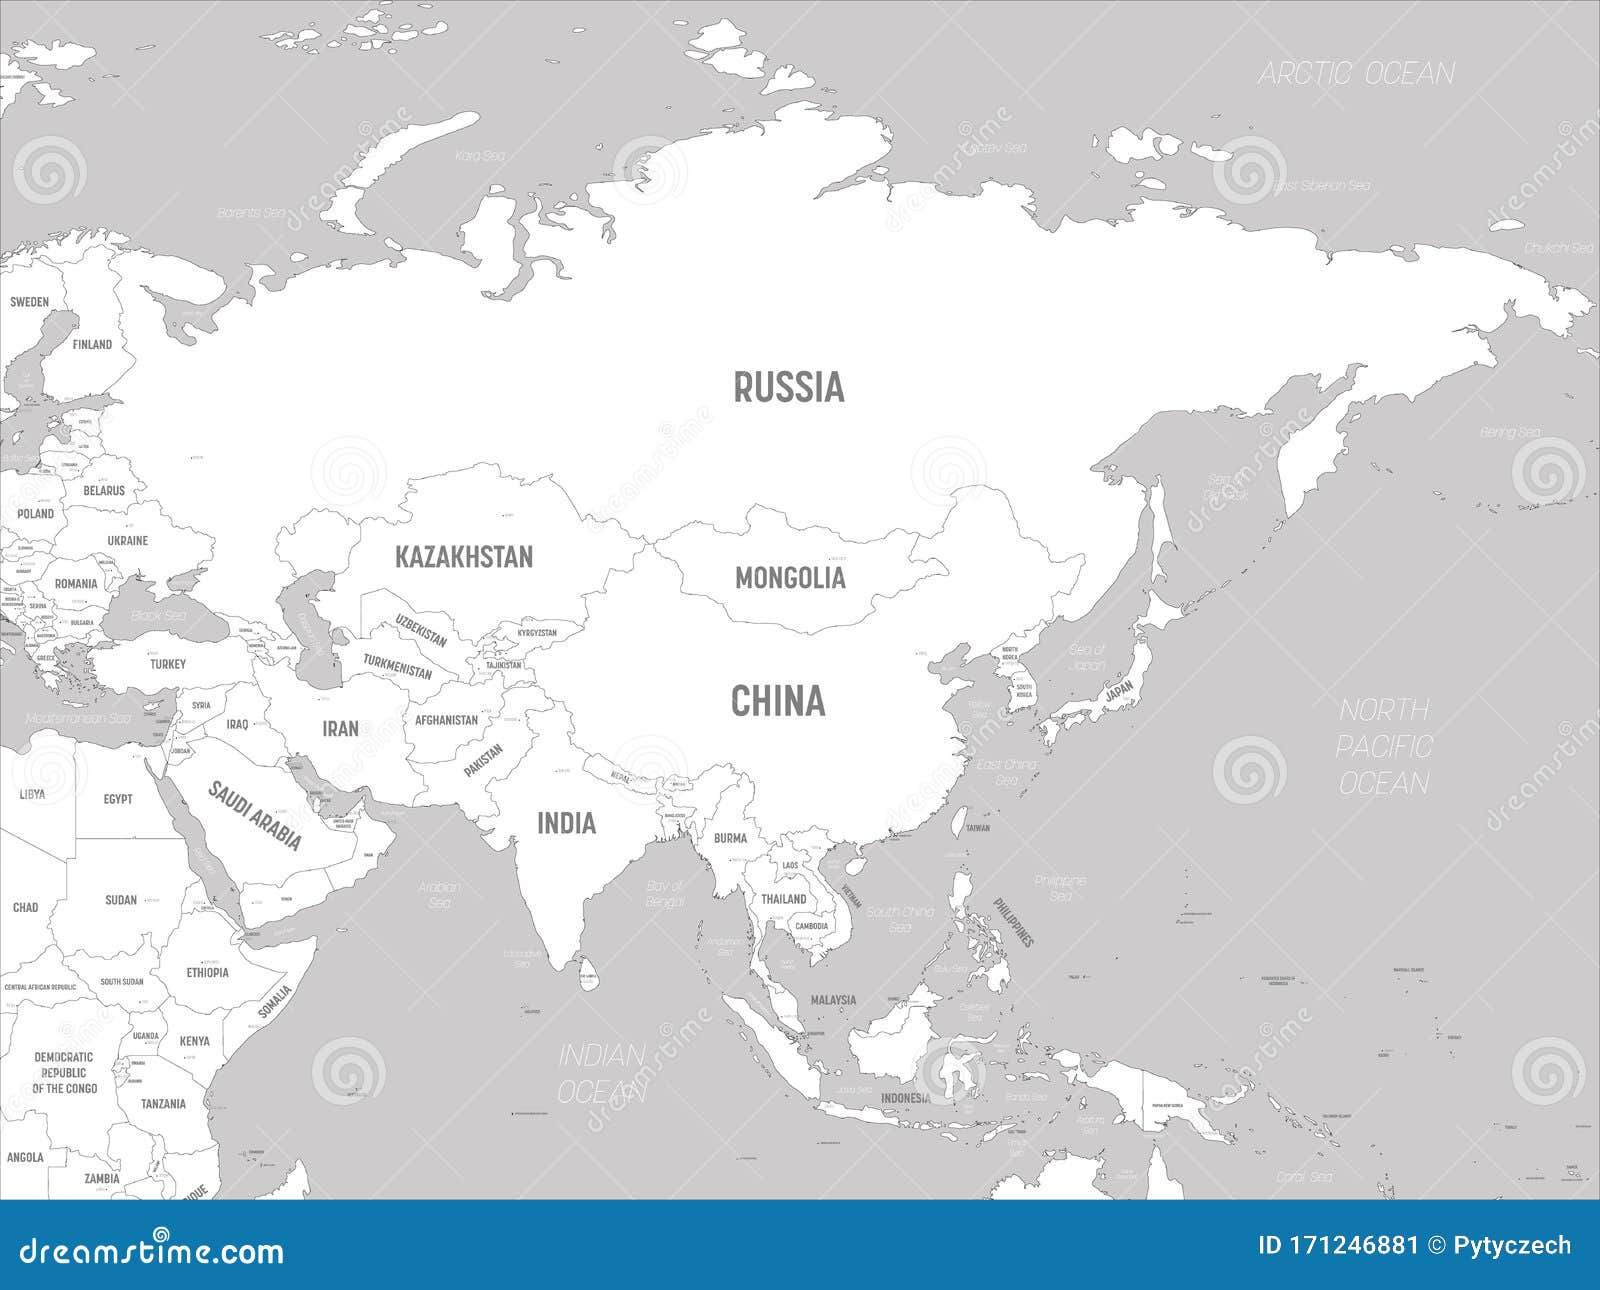 White asia. Карта Азии белая. Политическая карта Азии. Карта морей азиатского континента. Карта Азии белая с границами.